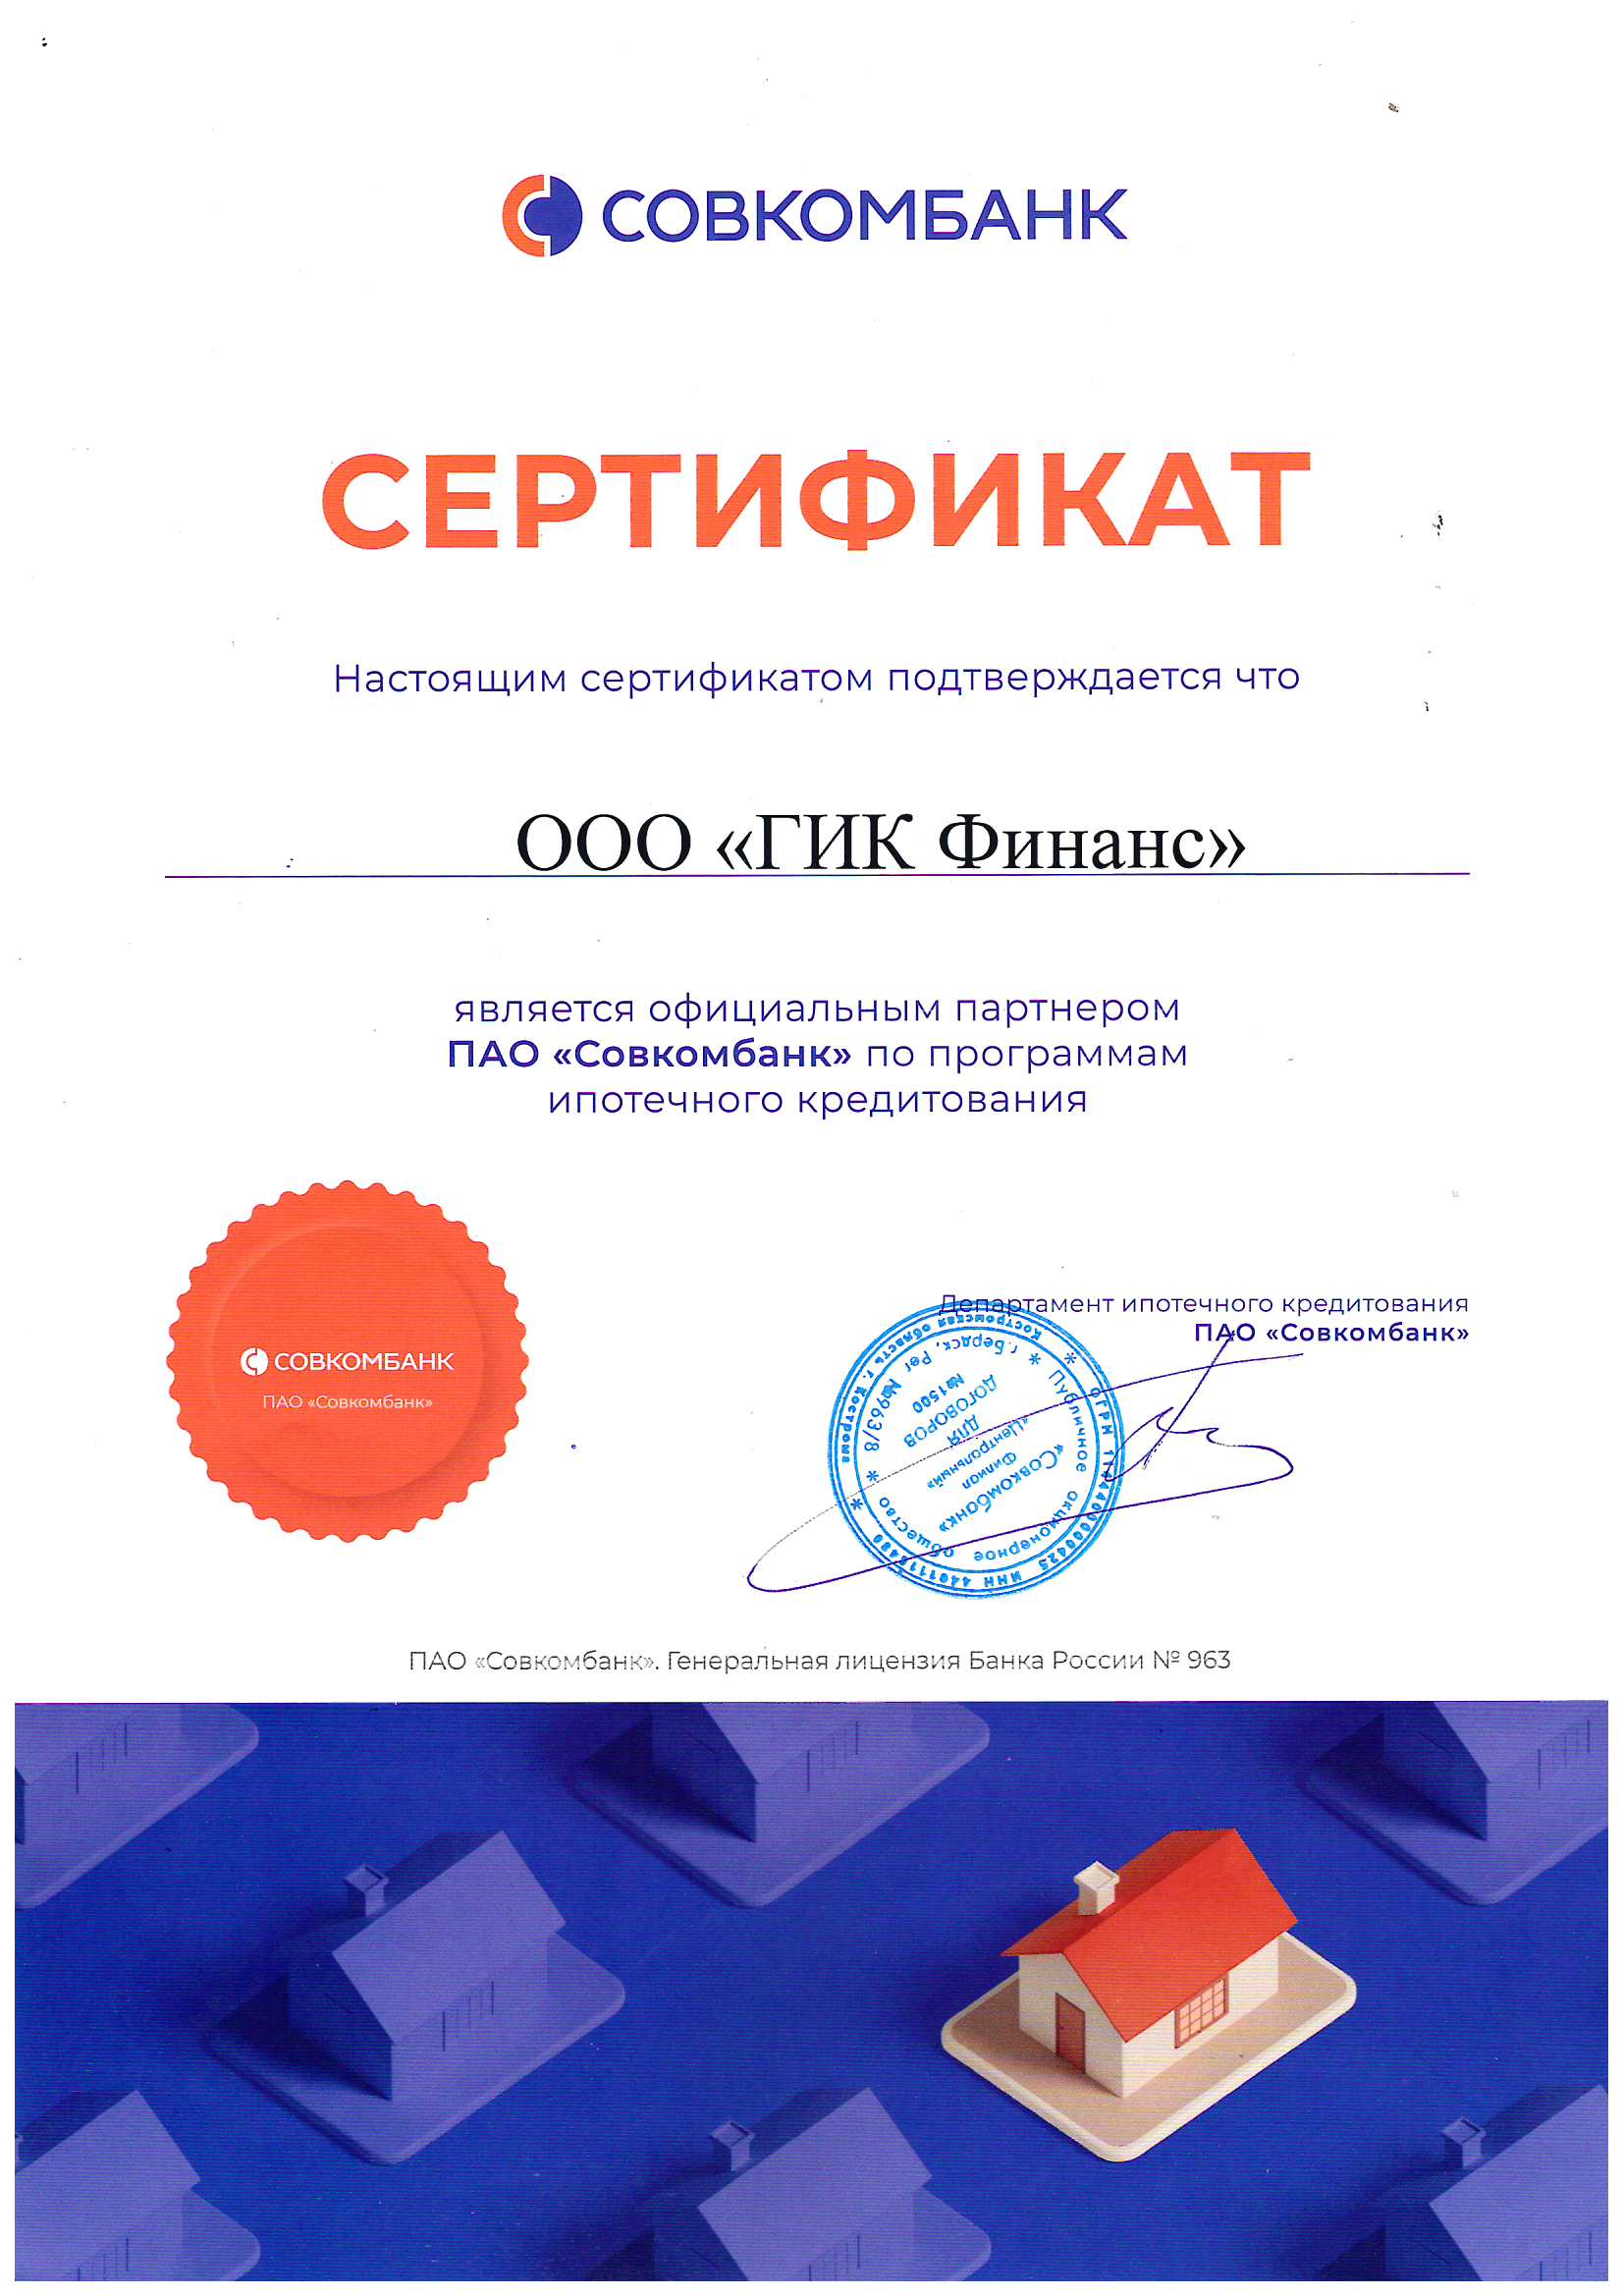 Сертификат о сотрудничестве с ПАО "Совкомбанк"